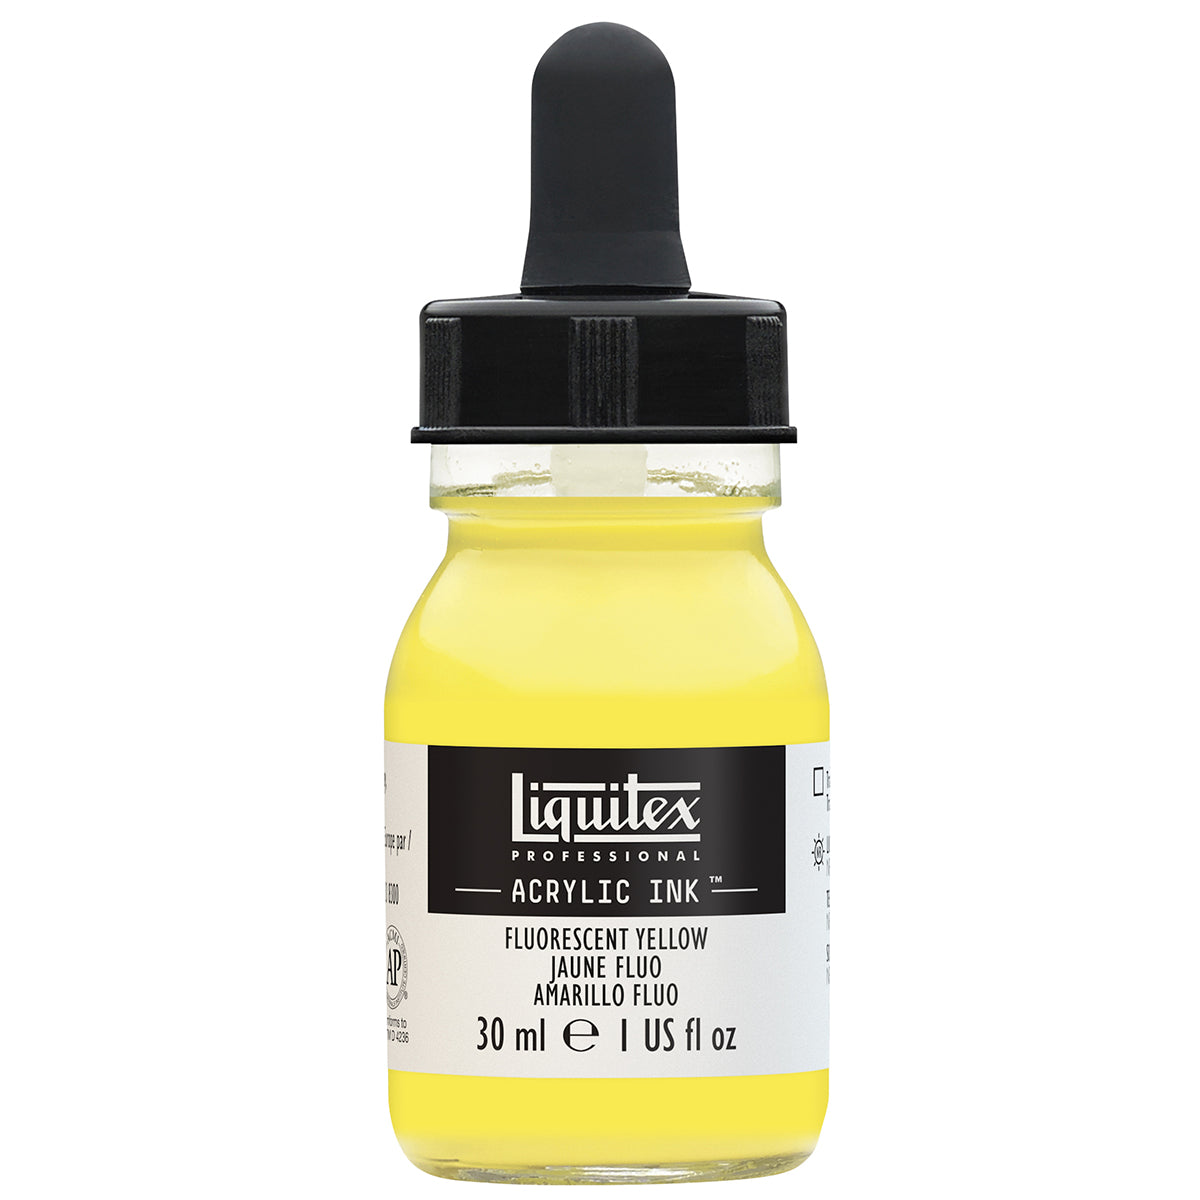 Liquitex - Acrylic Ink - 30ml Fluorescent Yellow